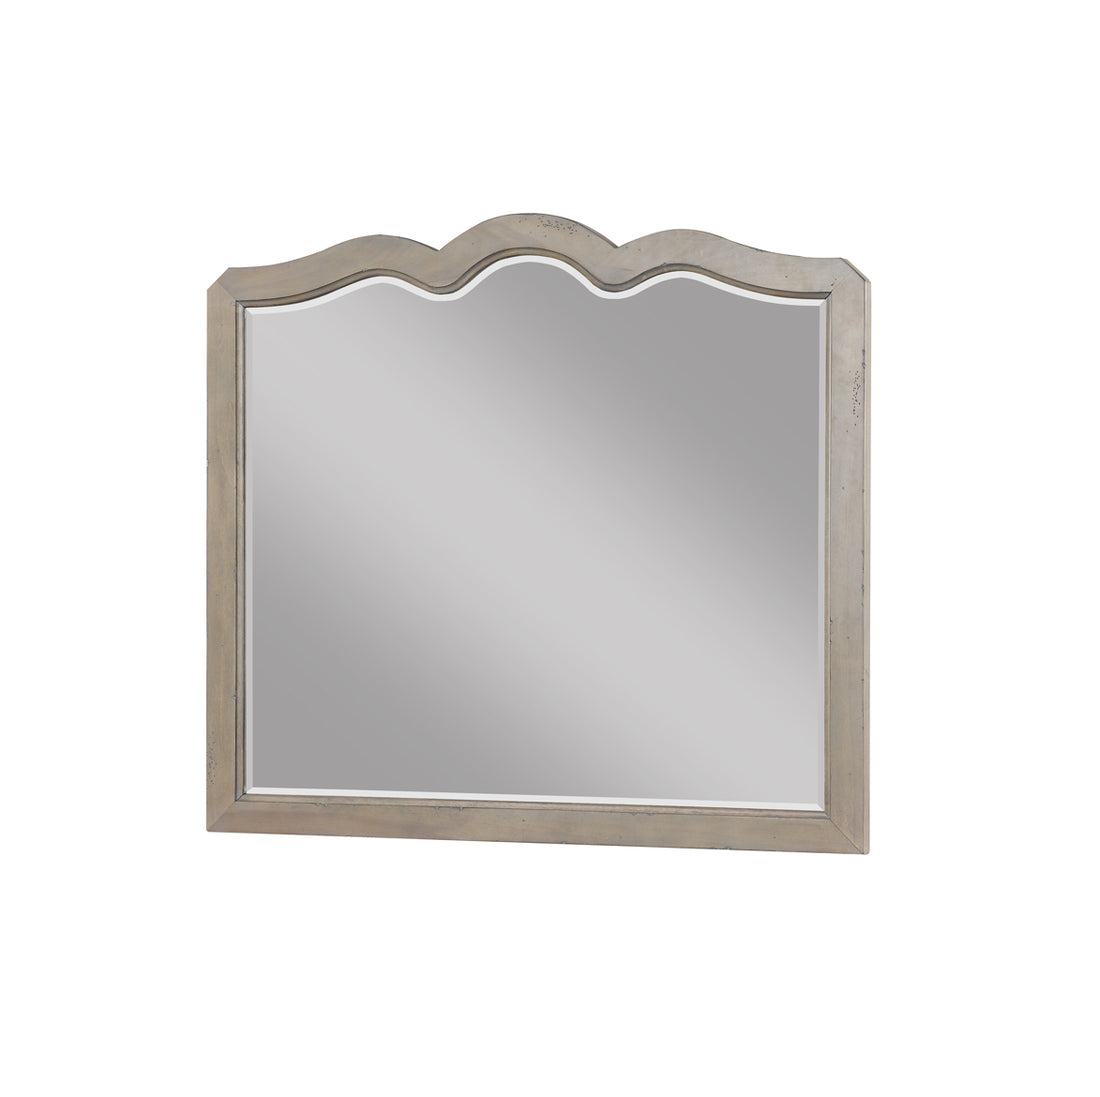 Laurel Grove Scallop Shaped Mirror, No